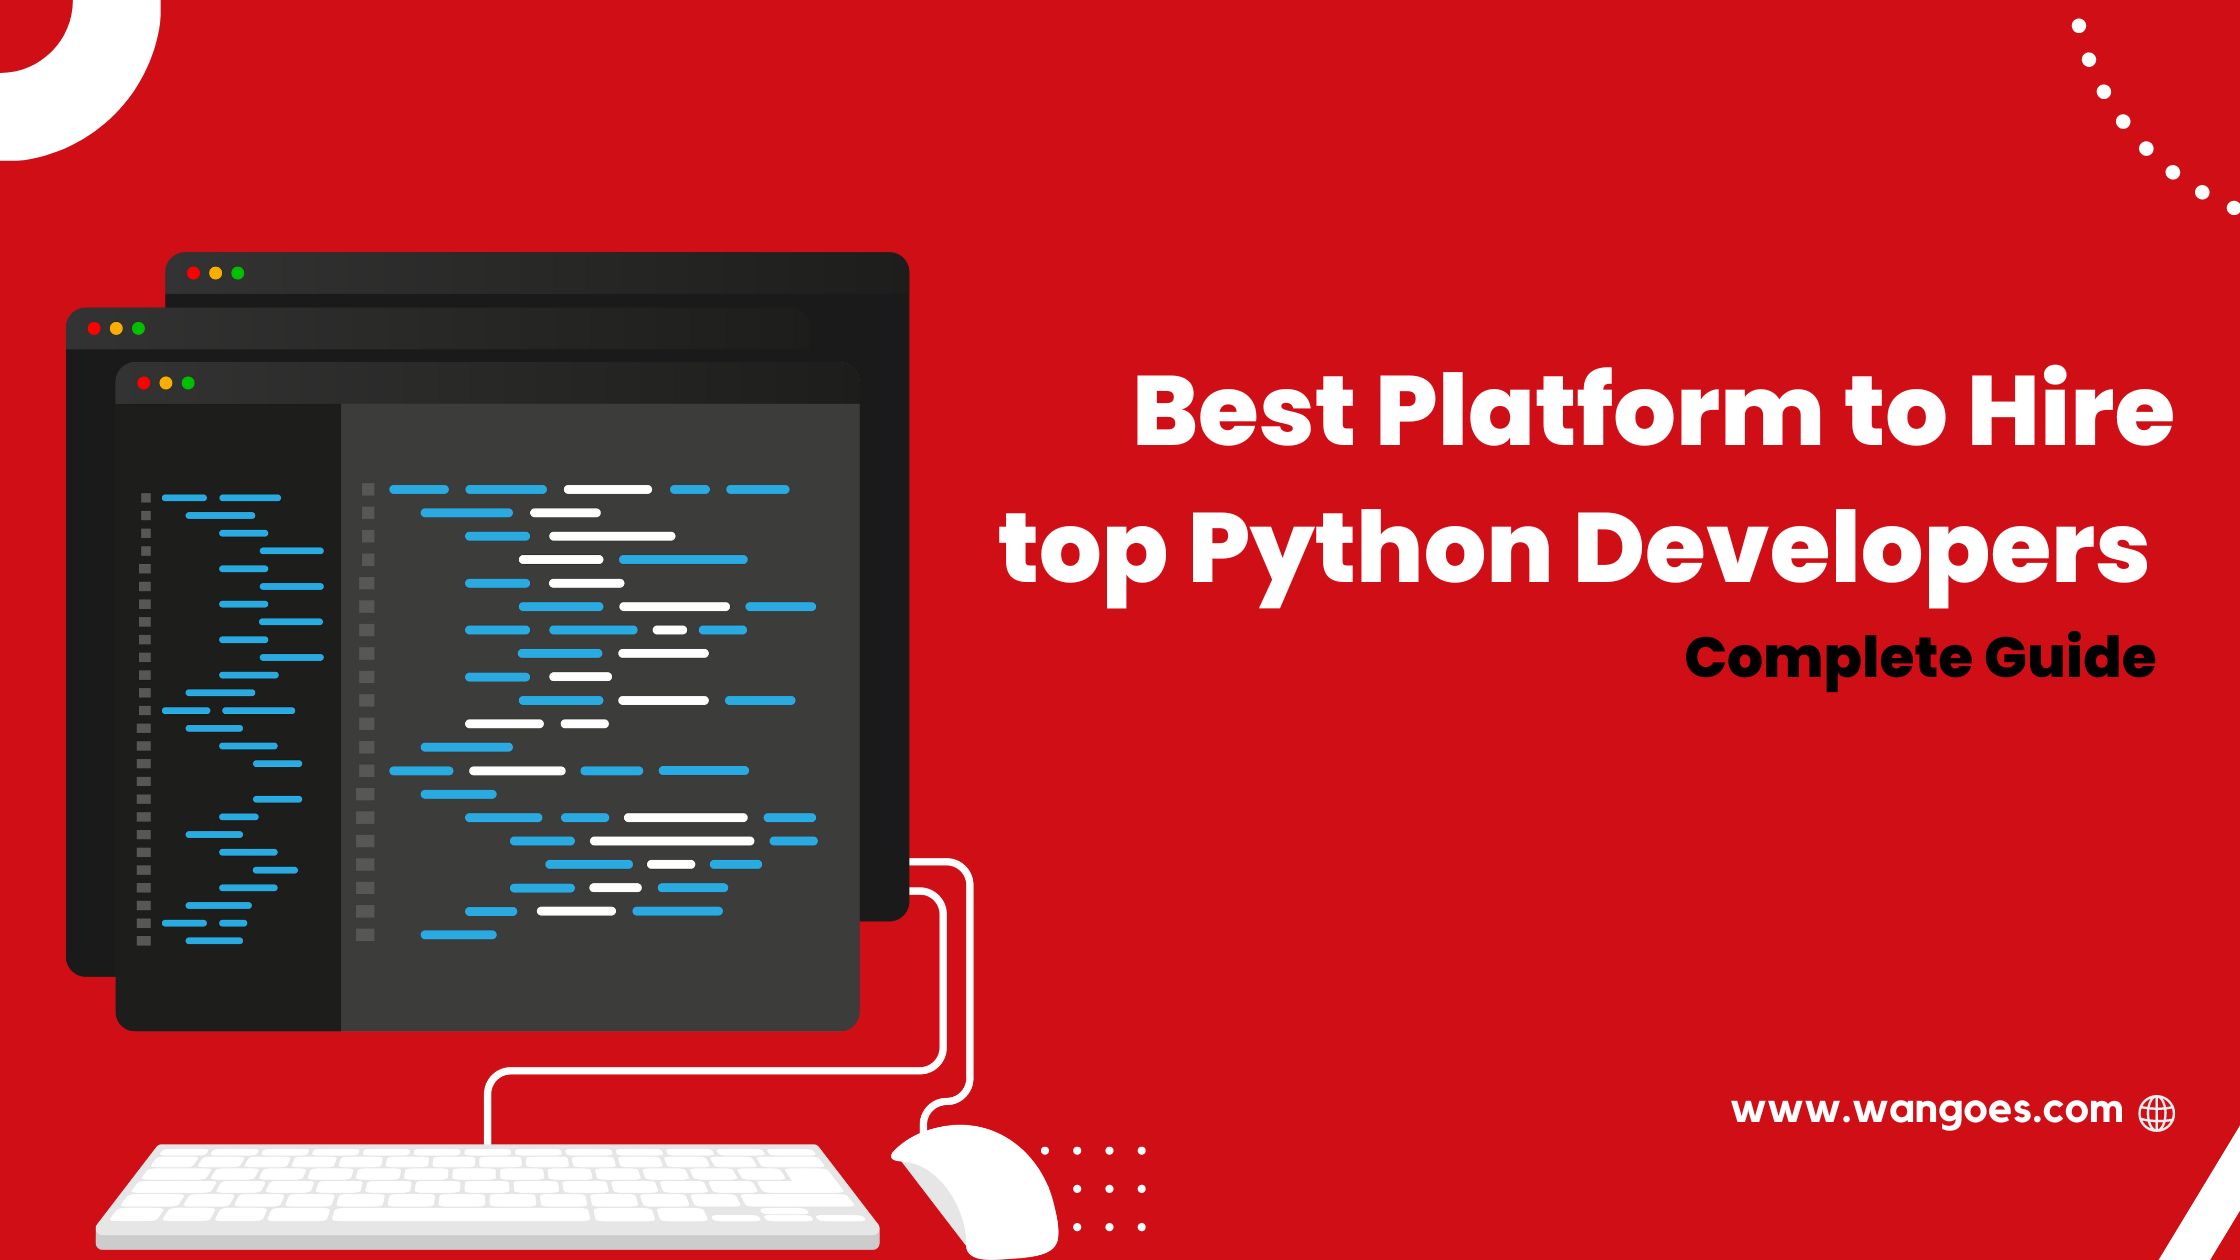 Best Platform to Hire Top Python Developers